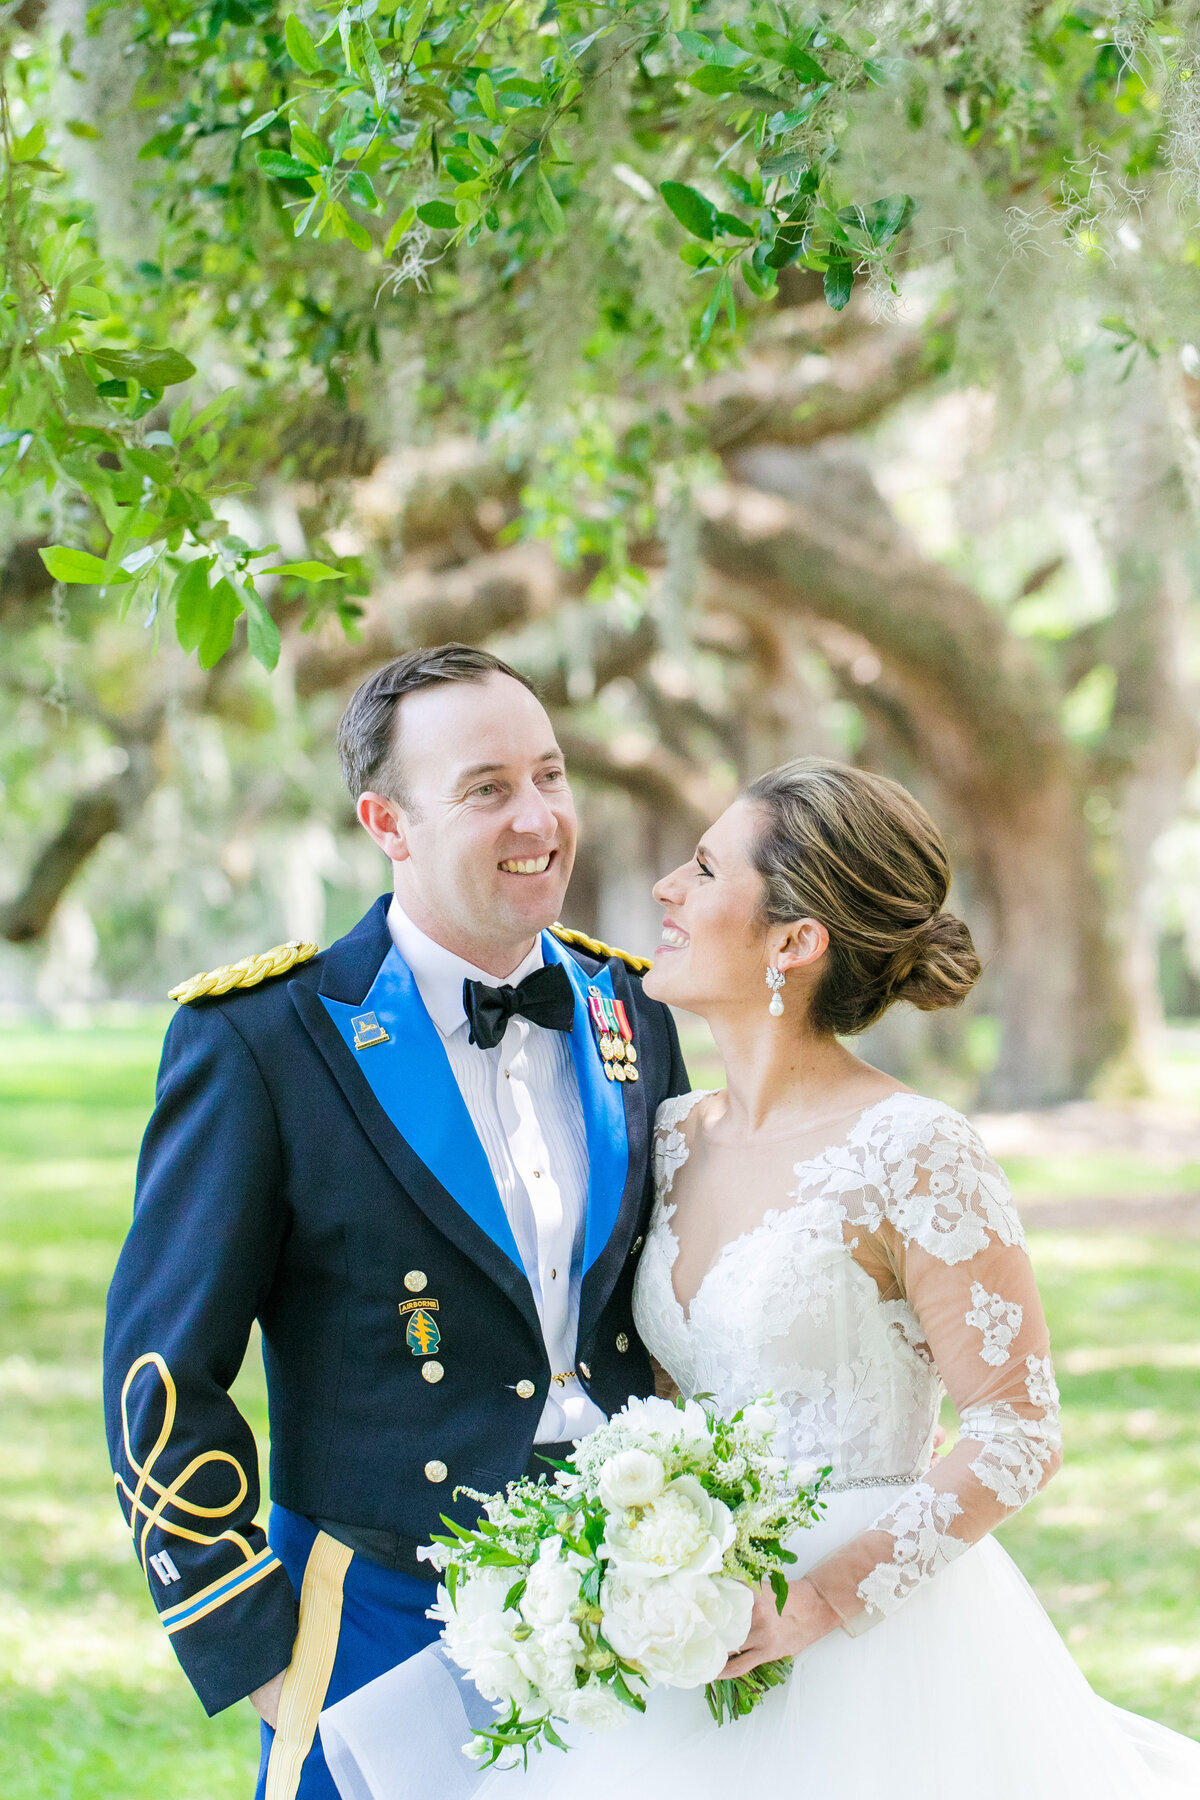 Bride and groom portraits at their  Boone Hall Plantation elegant spring soiree wedding  |  Charleston wedding photographer Dana Cubbage Weddings